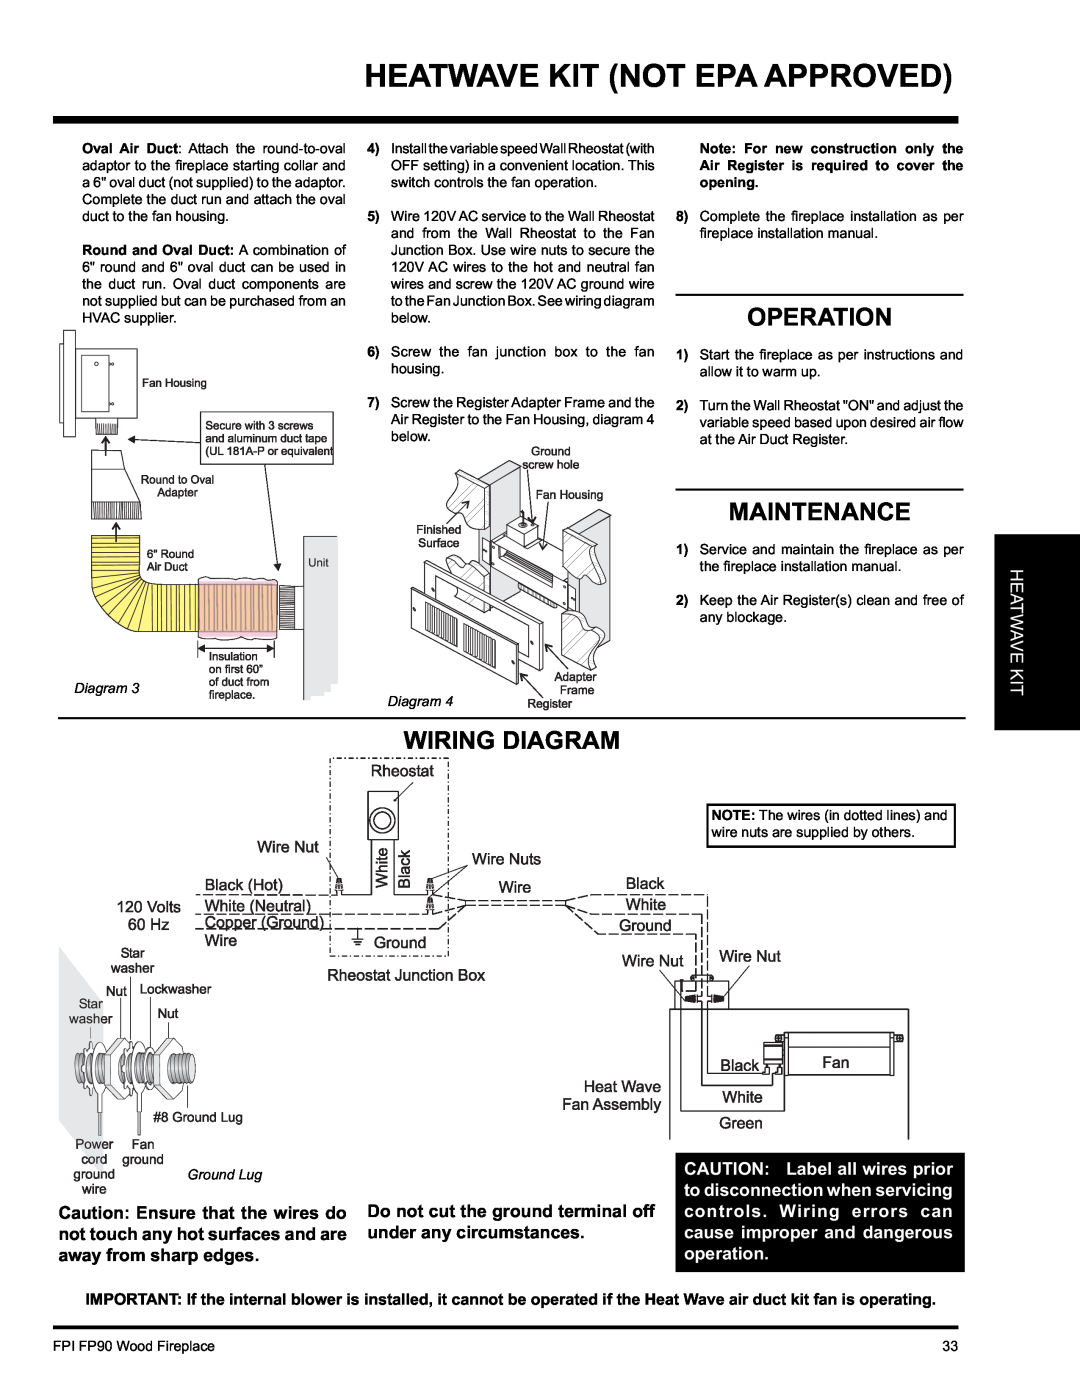 Regency FP90 installation manual Operation, Maintenance, Wiring Diagram, Heatwave 